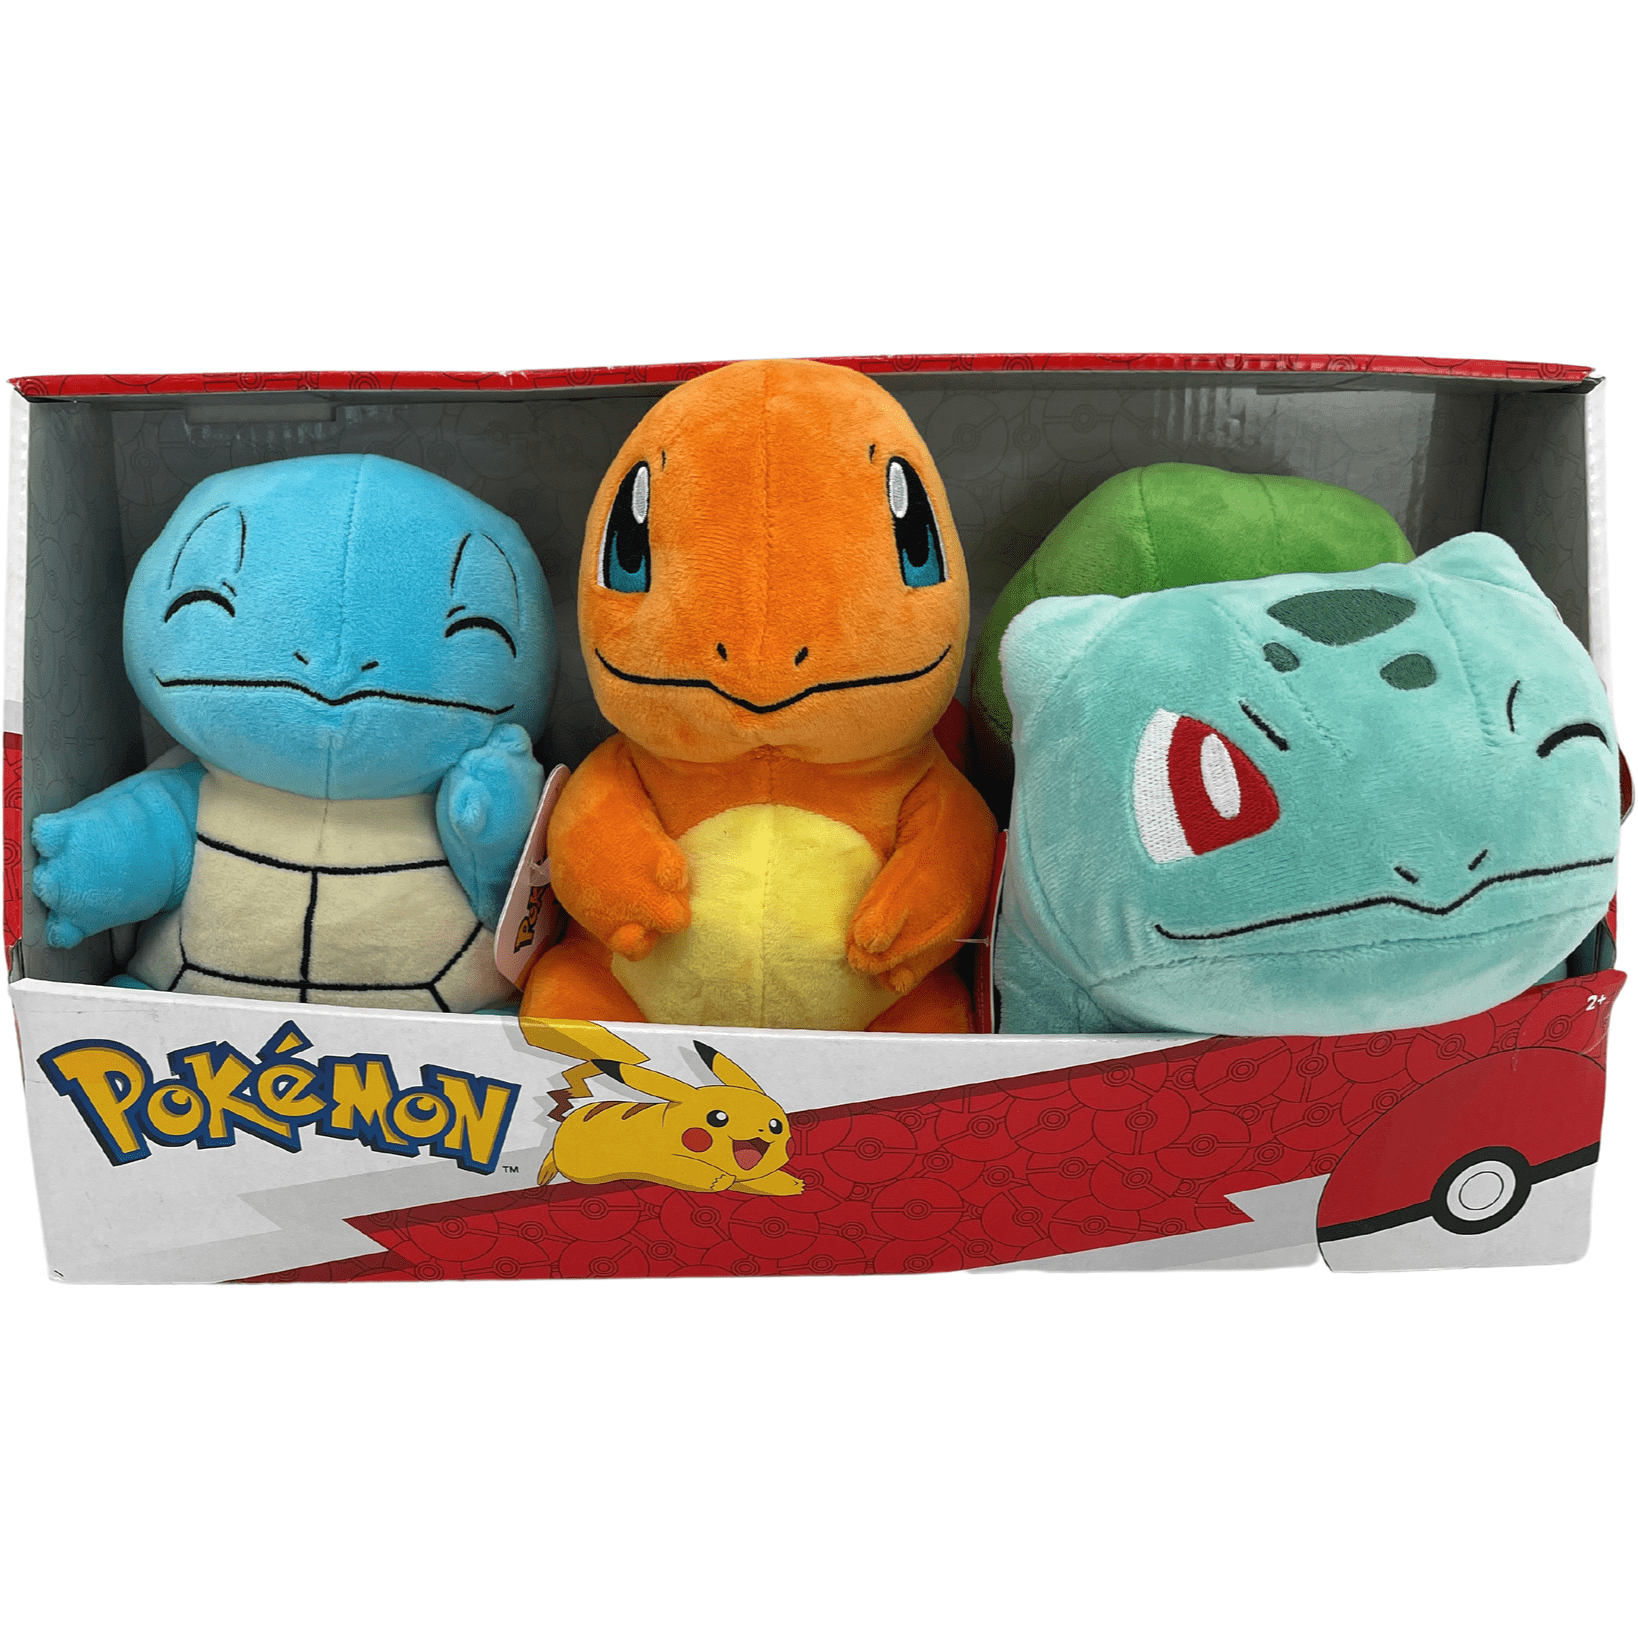 Pokémon Character Pack / 3 Pack / Stuffed Animal Set / Charmander, Squirtle & Bulbasaur **DEALS**